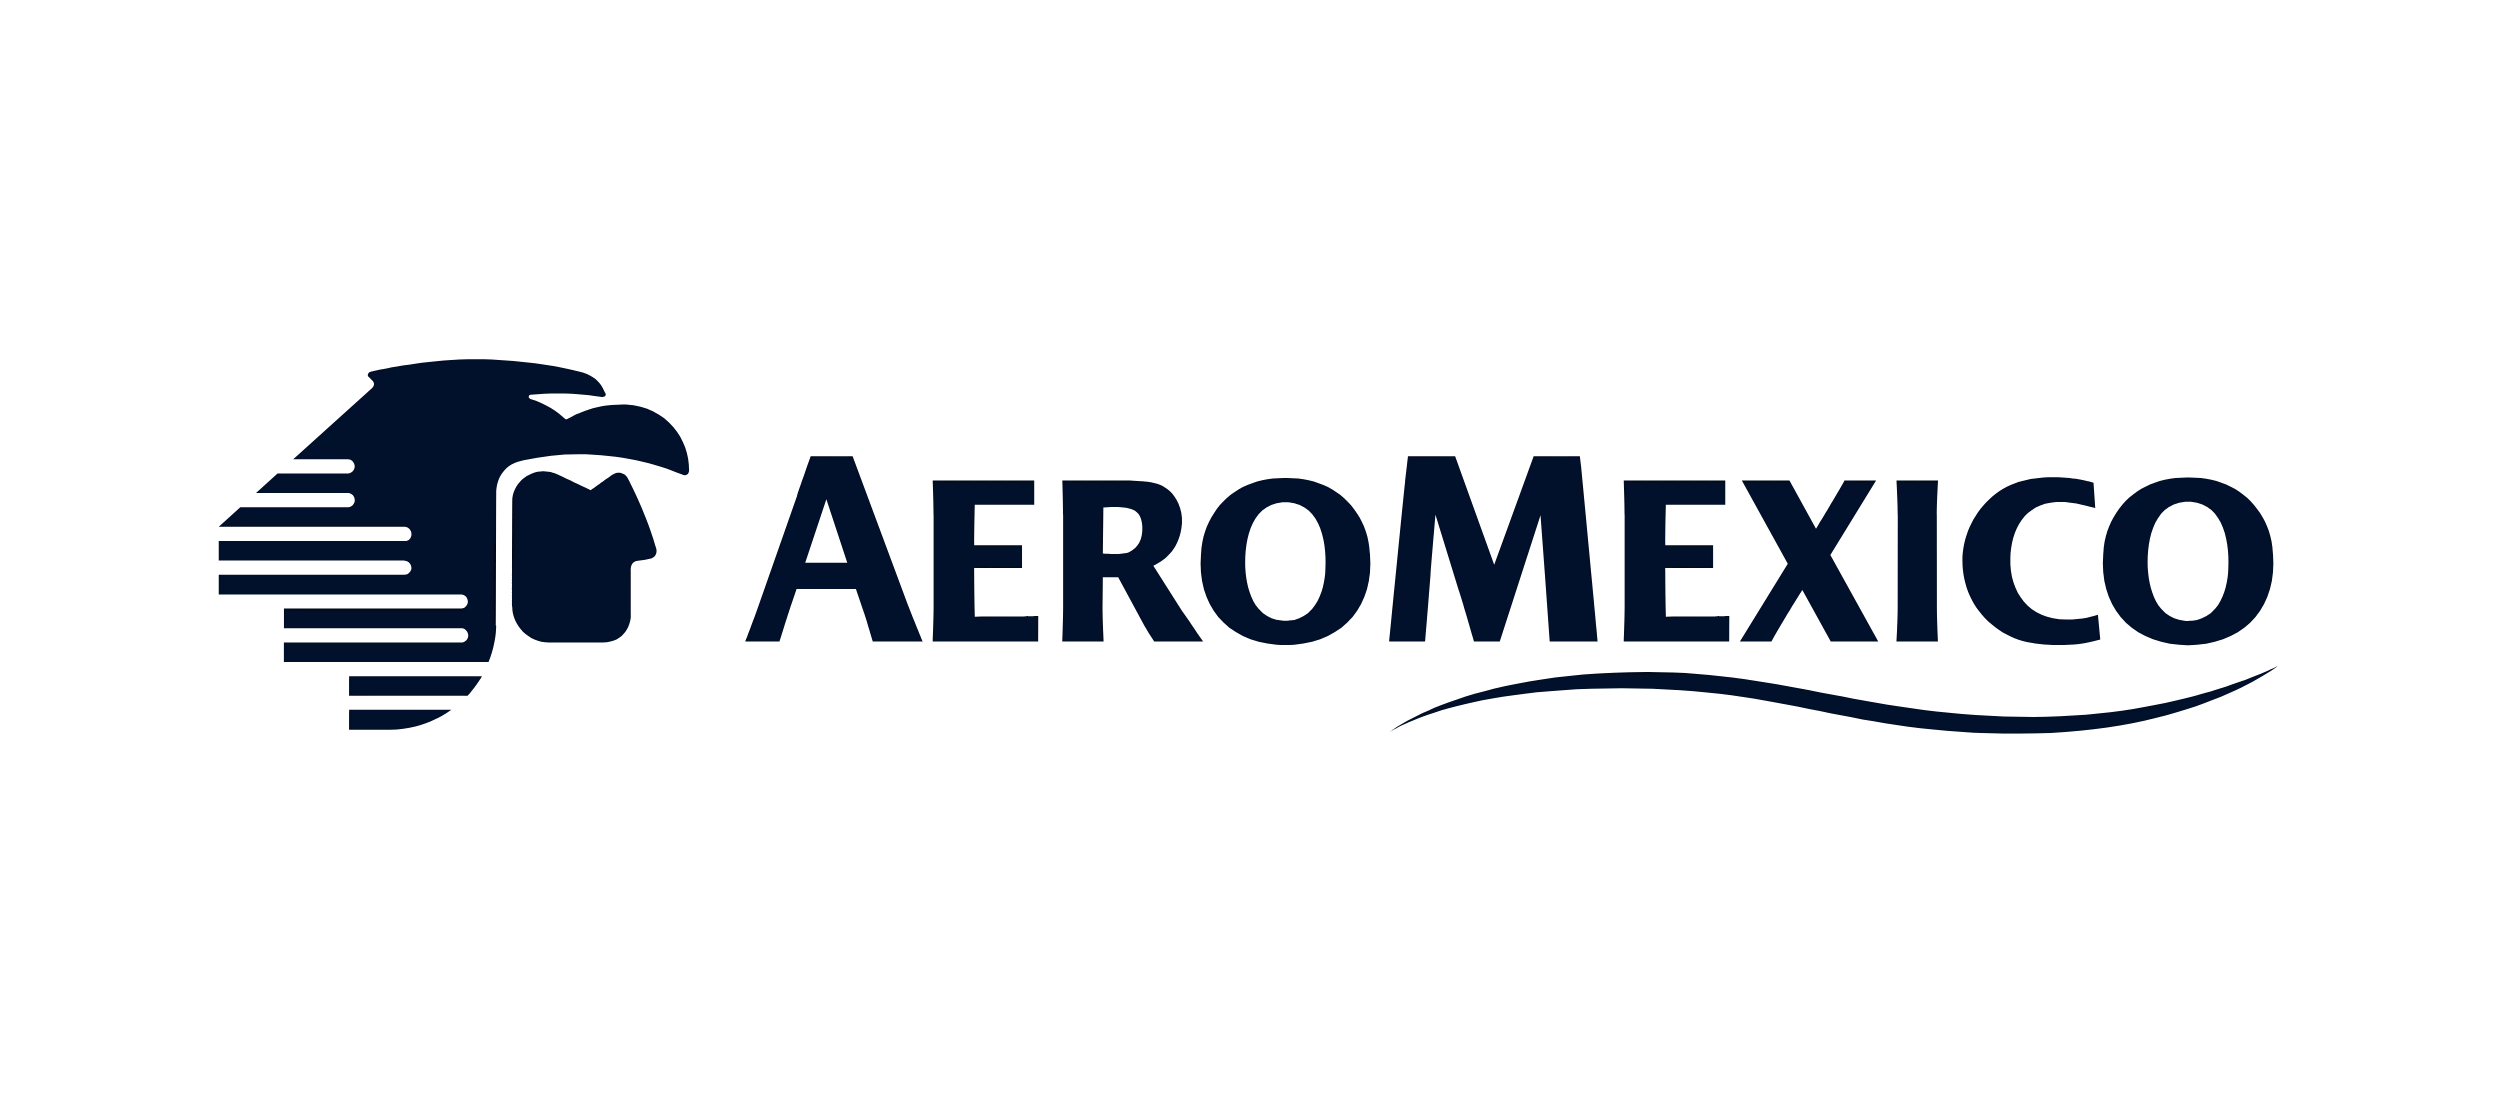 Logo aeromexico